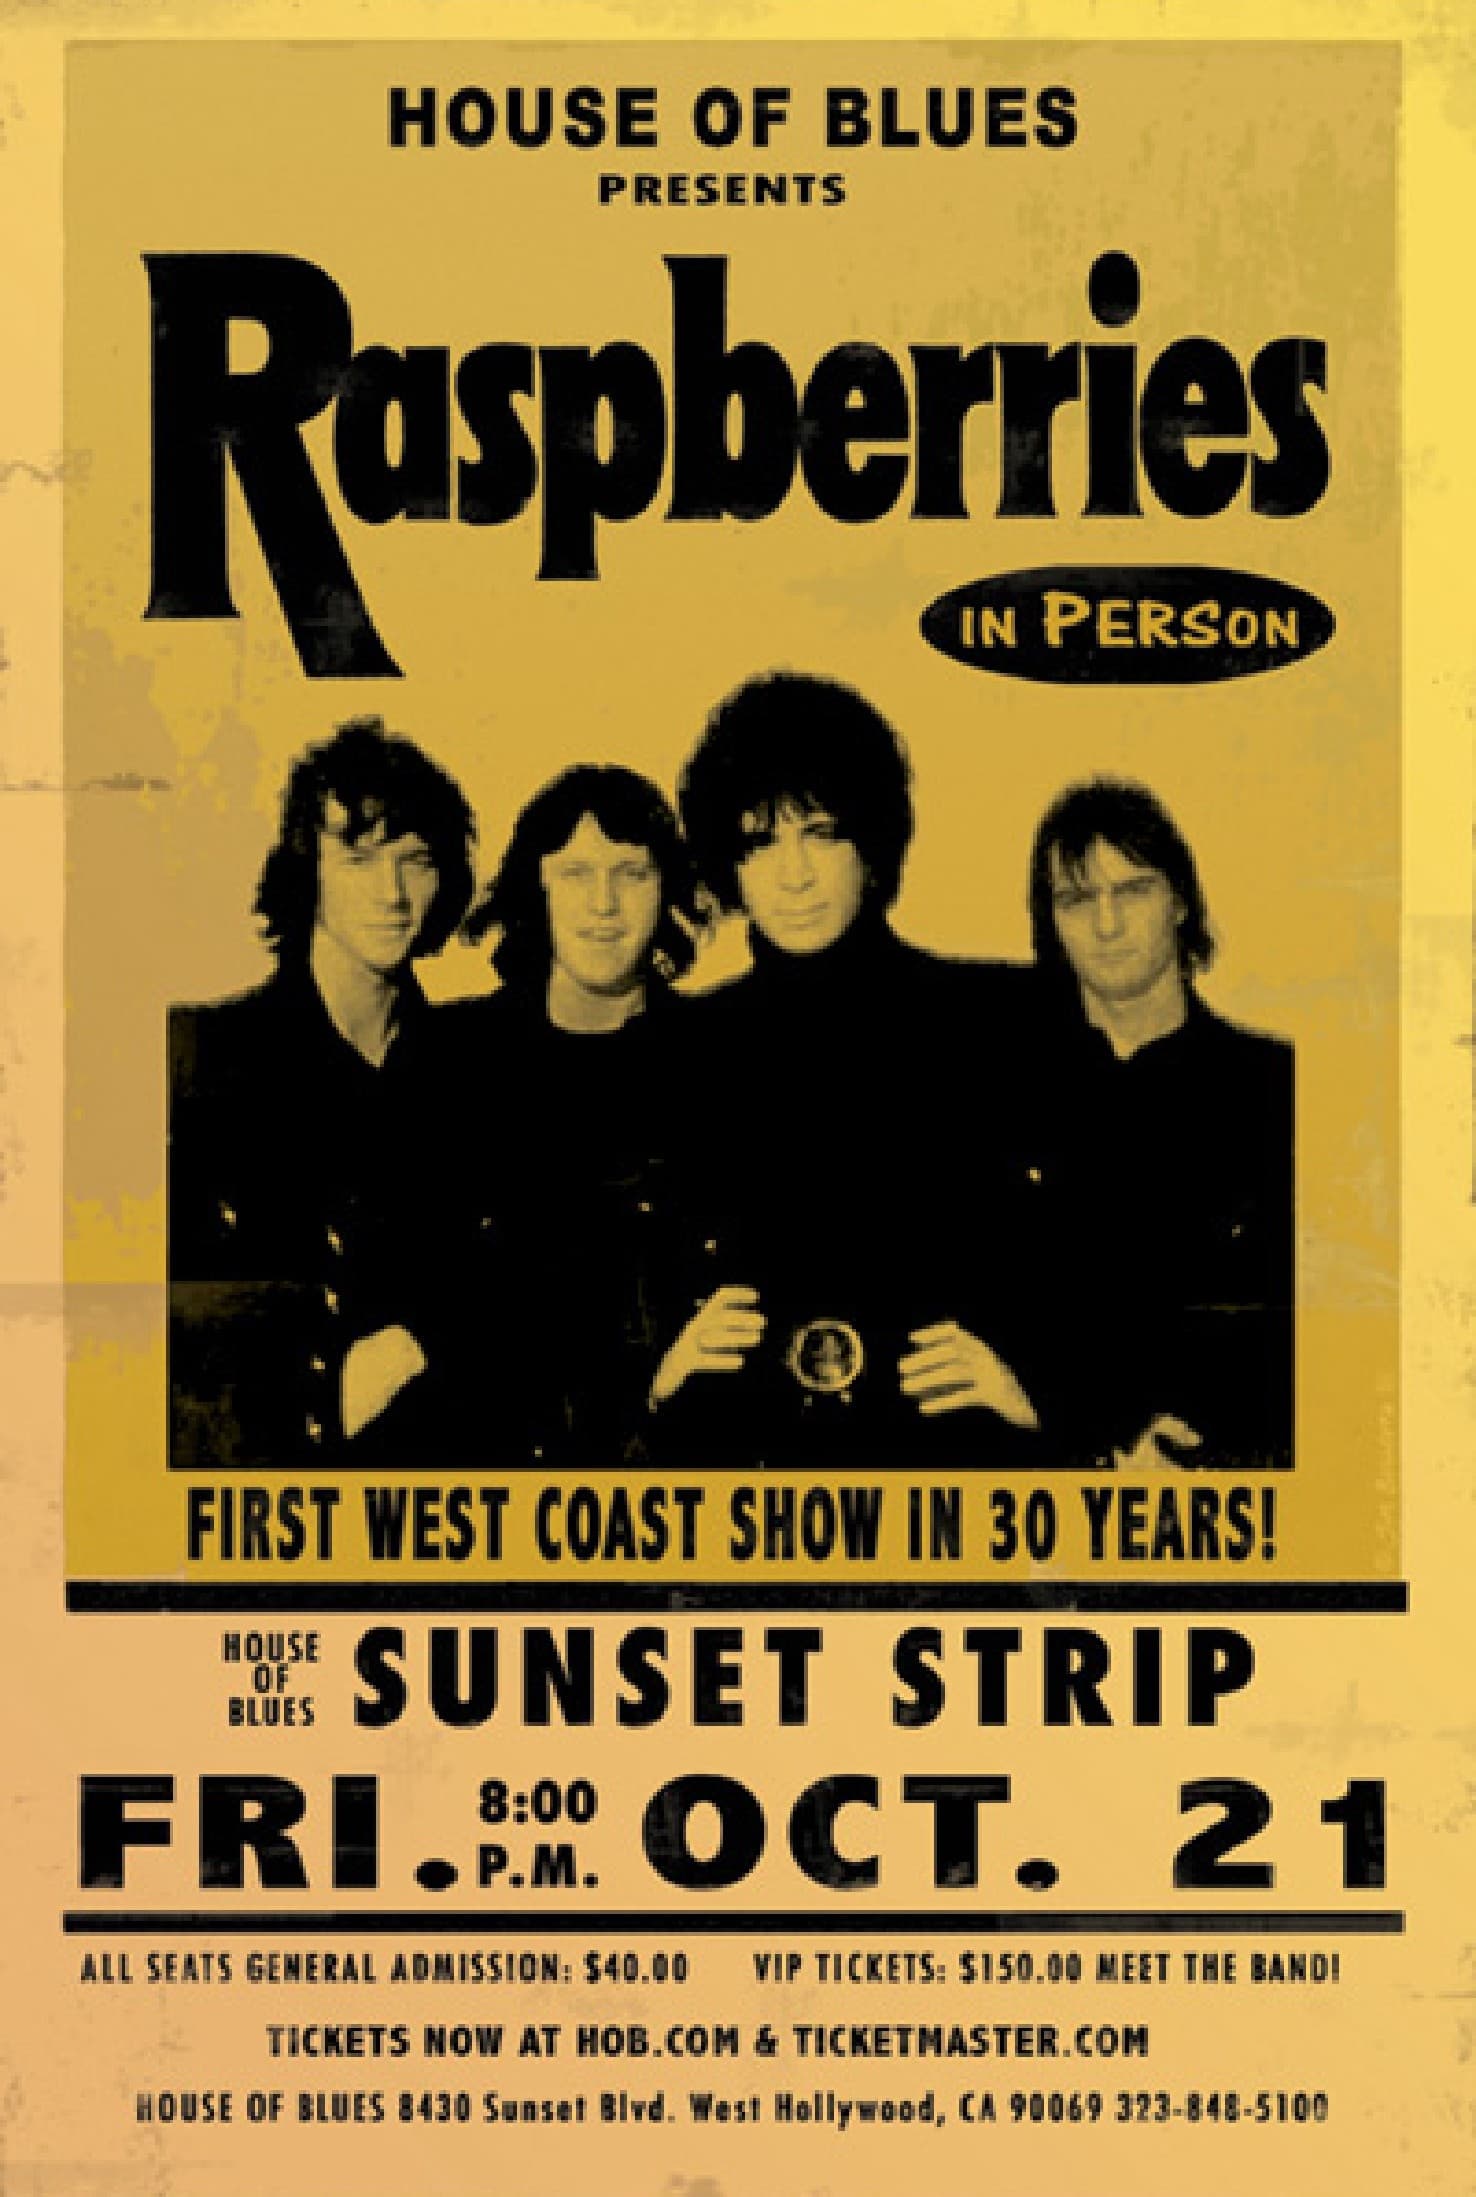 Raspberries: Live on Sunset Strip